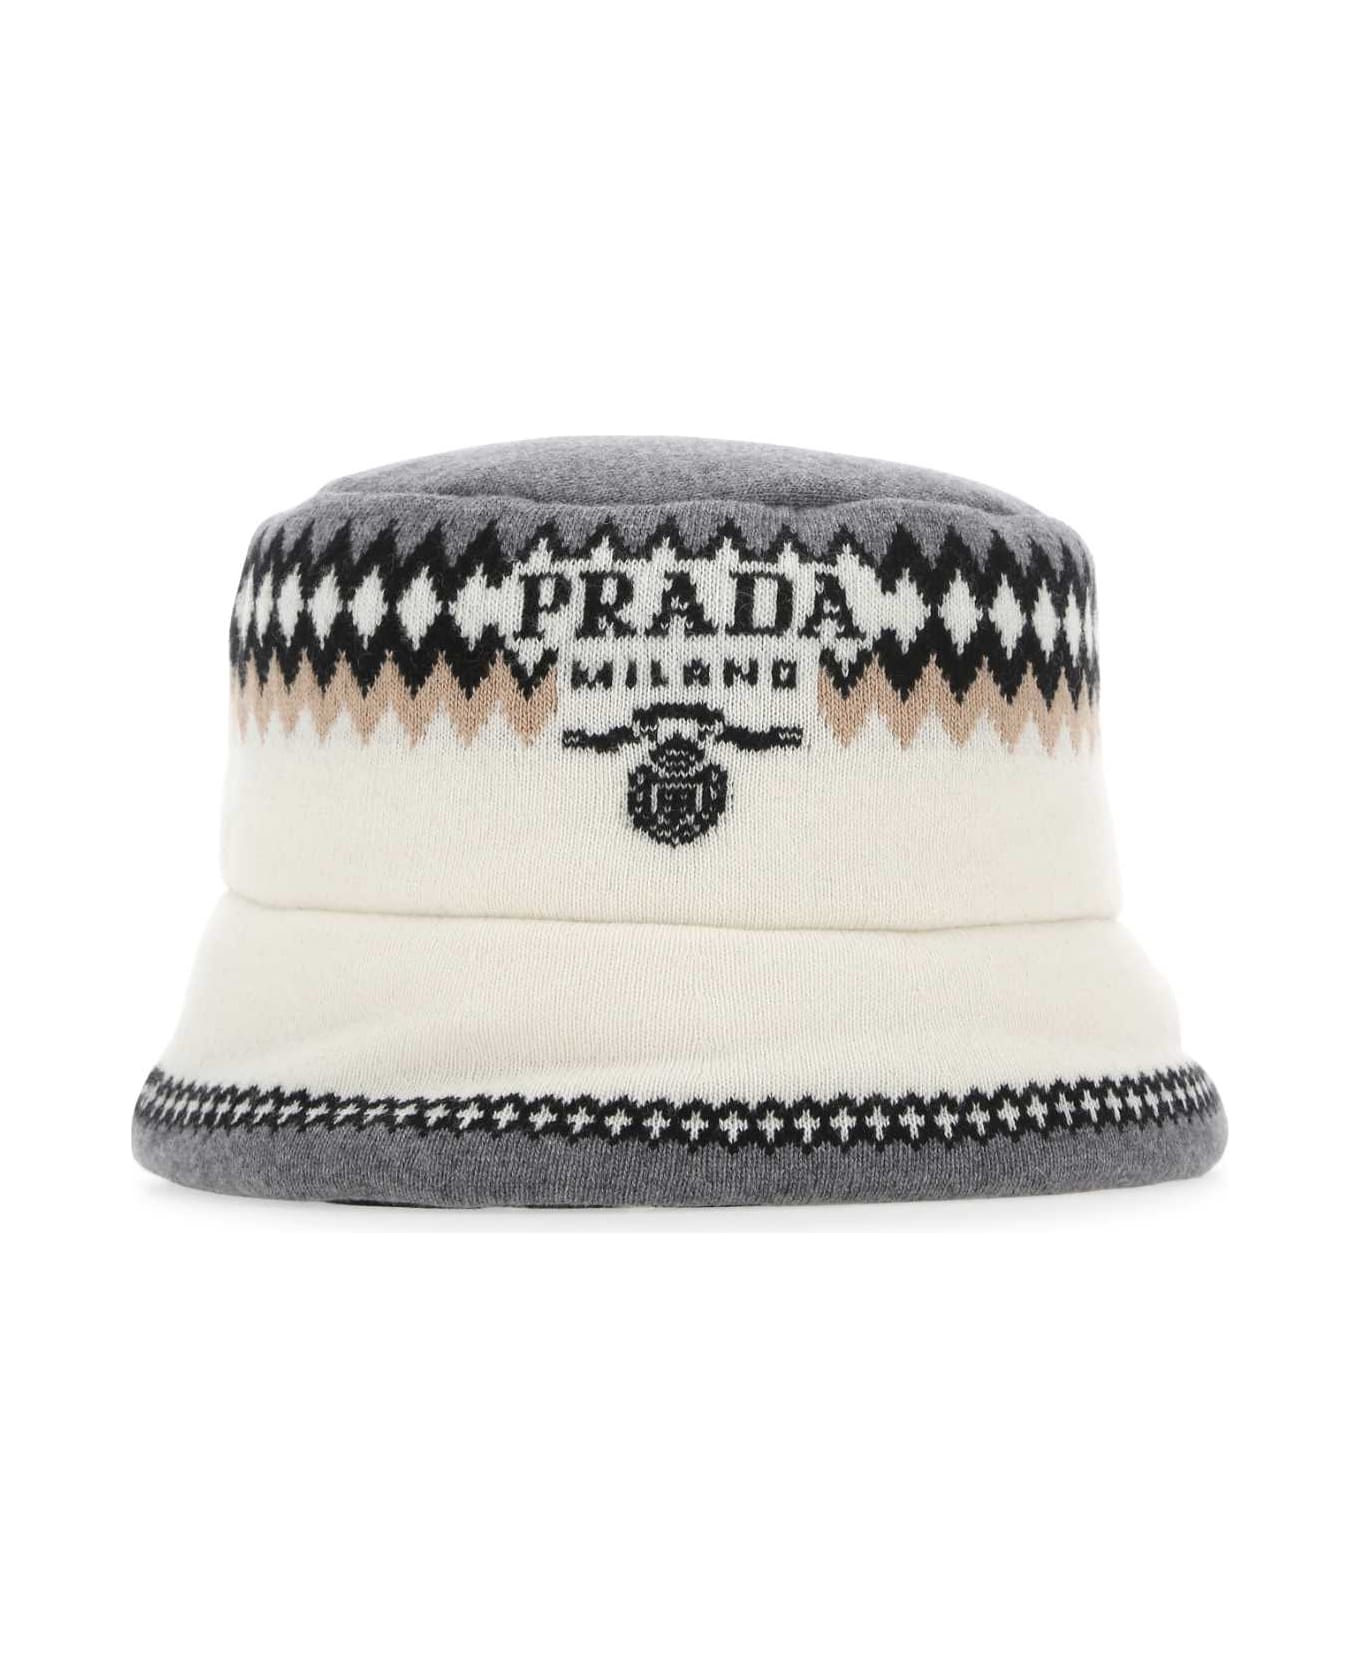 Prada Embroidered Wool Blend Hat - CAMMELLO 帽子